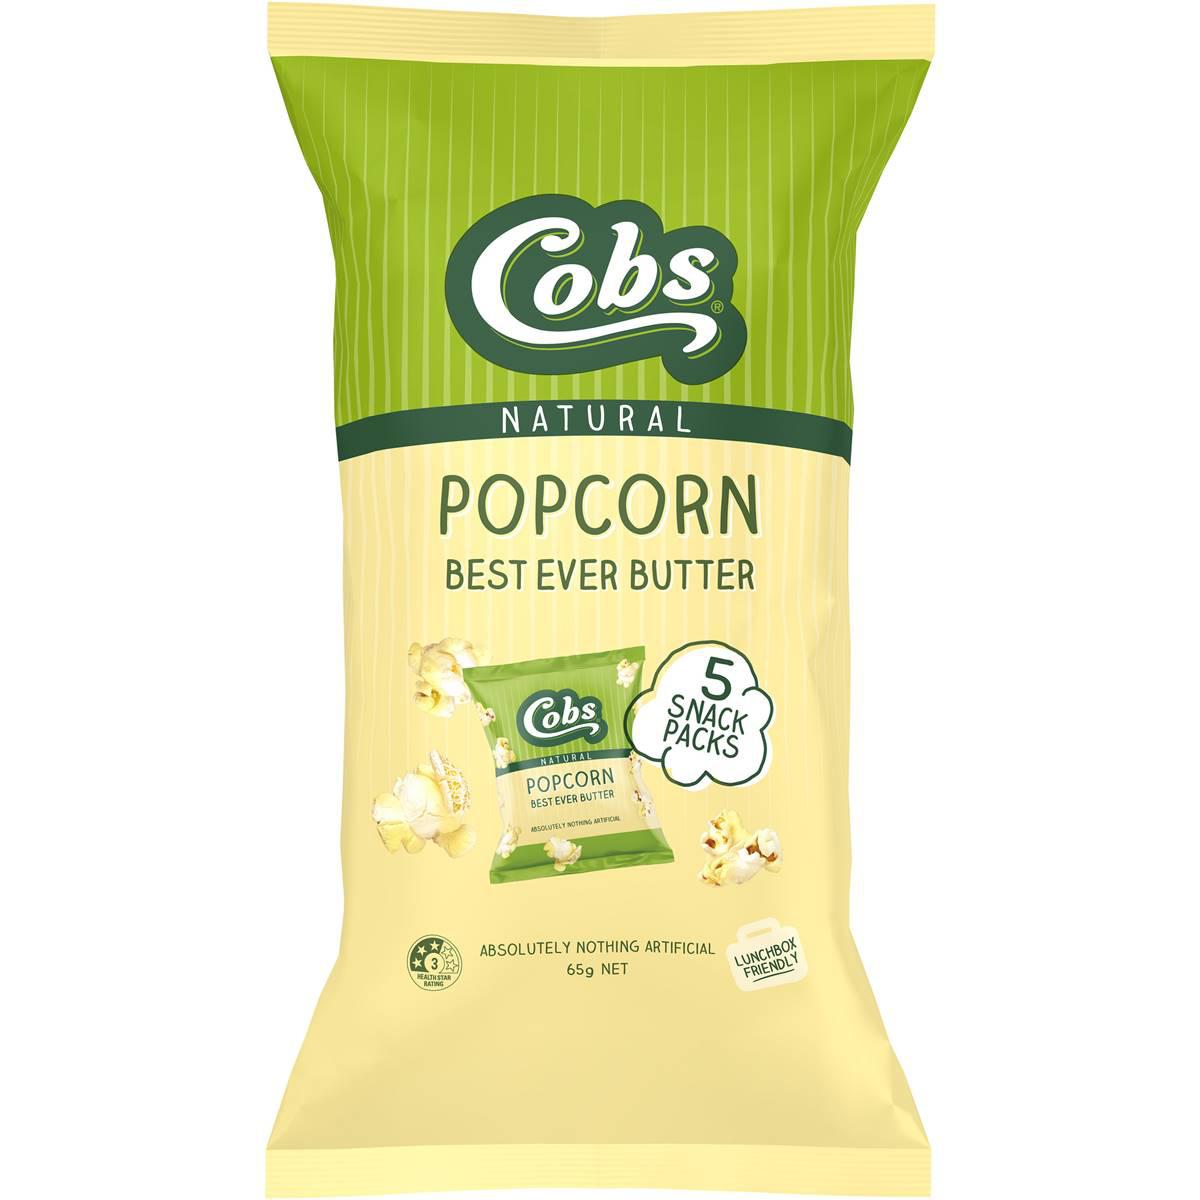 Cobs Natural Popcorn Best Ever Butter 5x13g